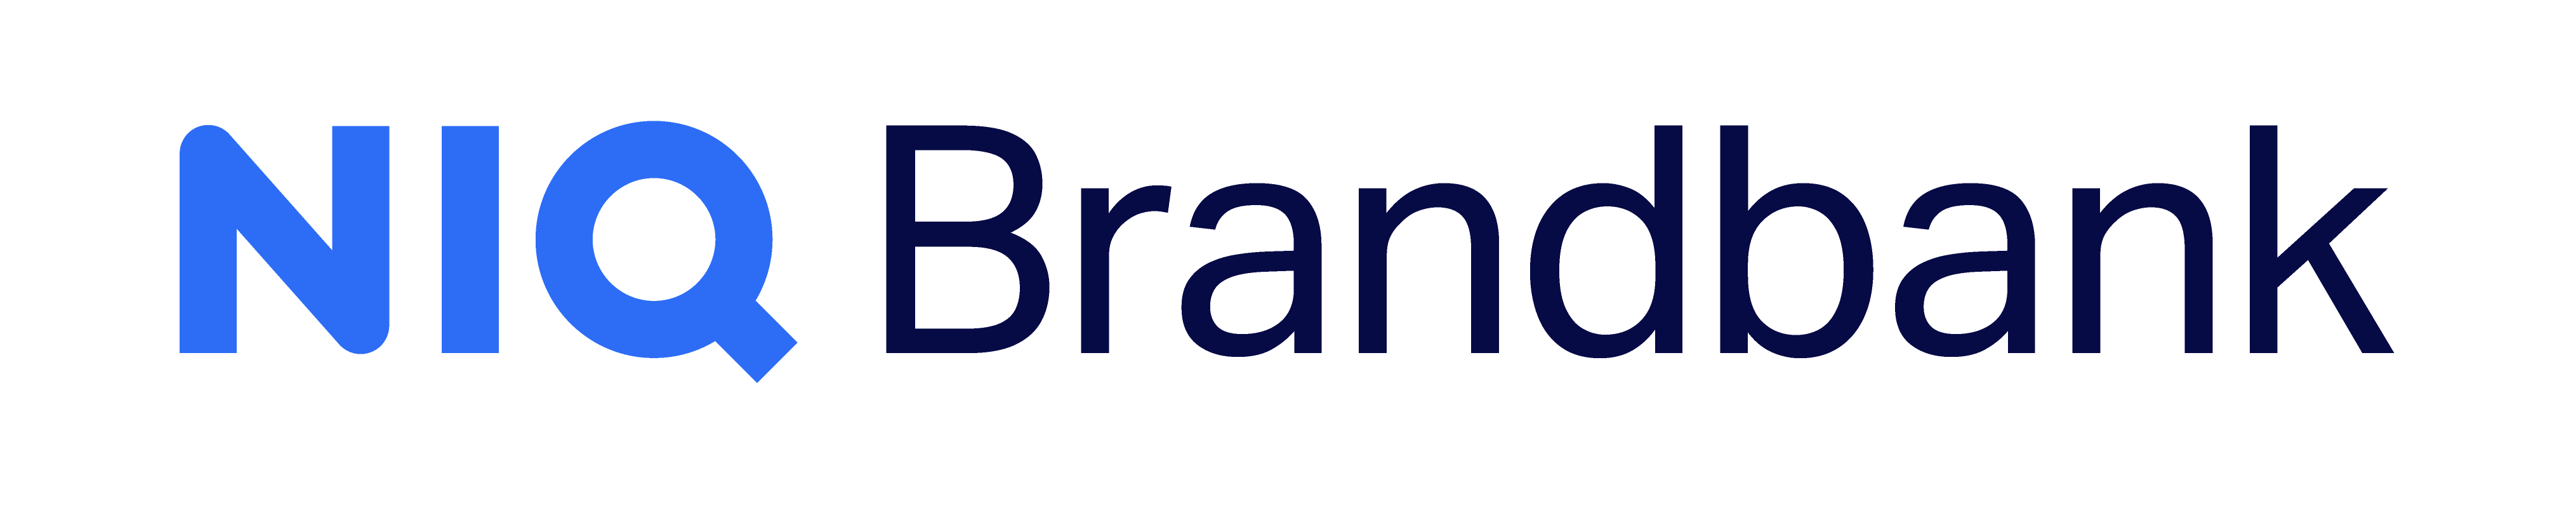 Partner with NIQ Brandbank - Walmart.com solution provider page